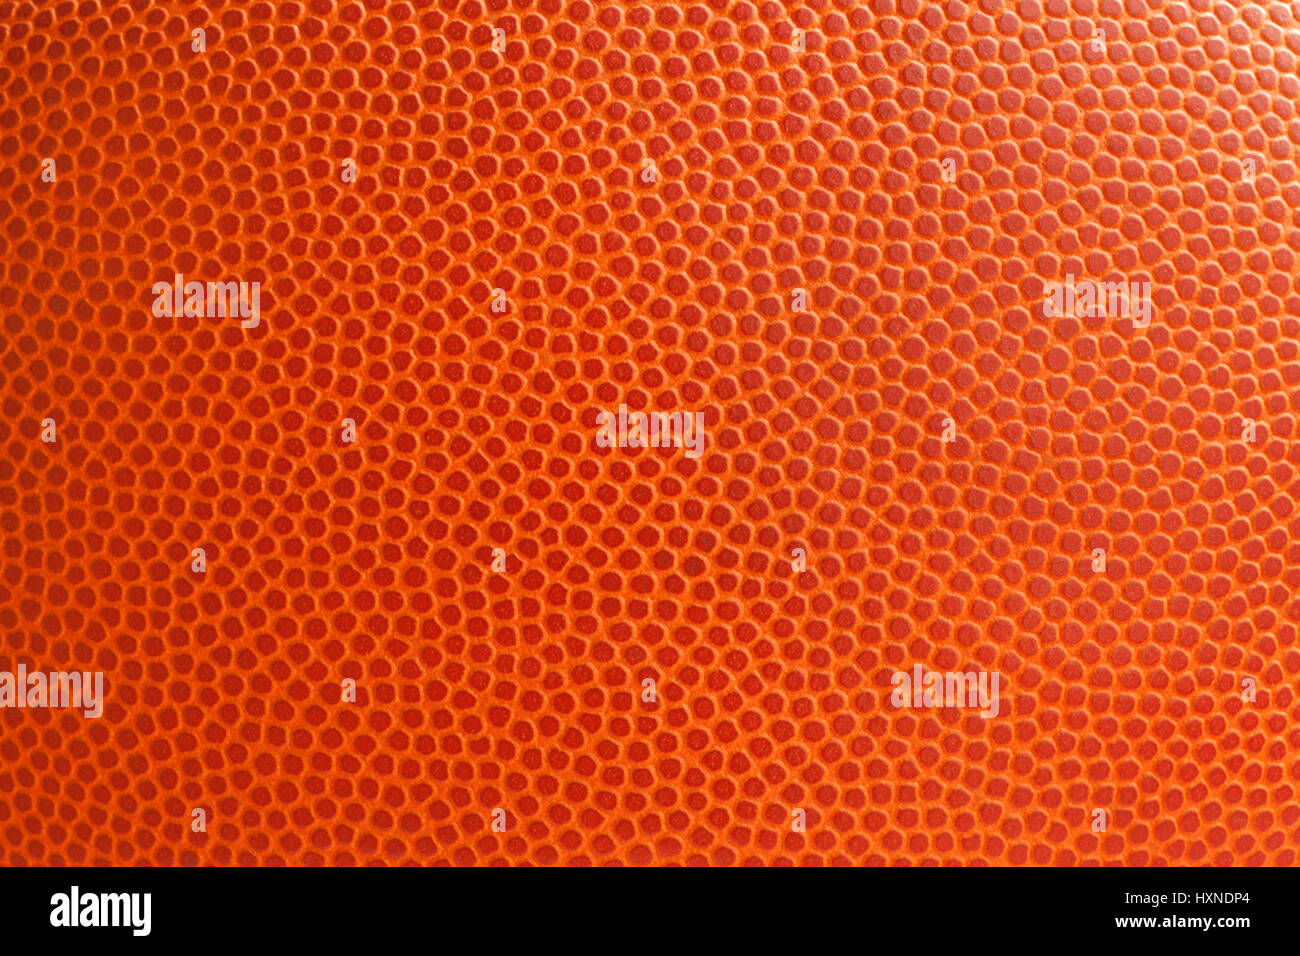 Basketball texture shot close up Stock Photo